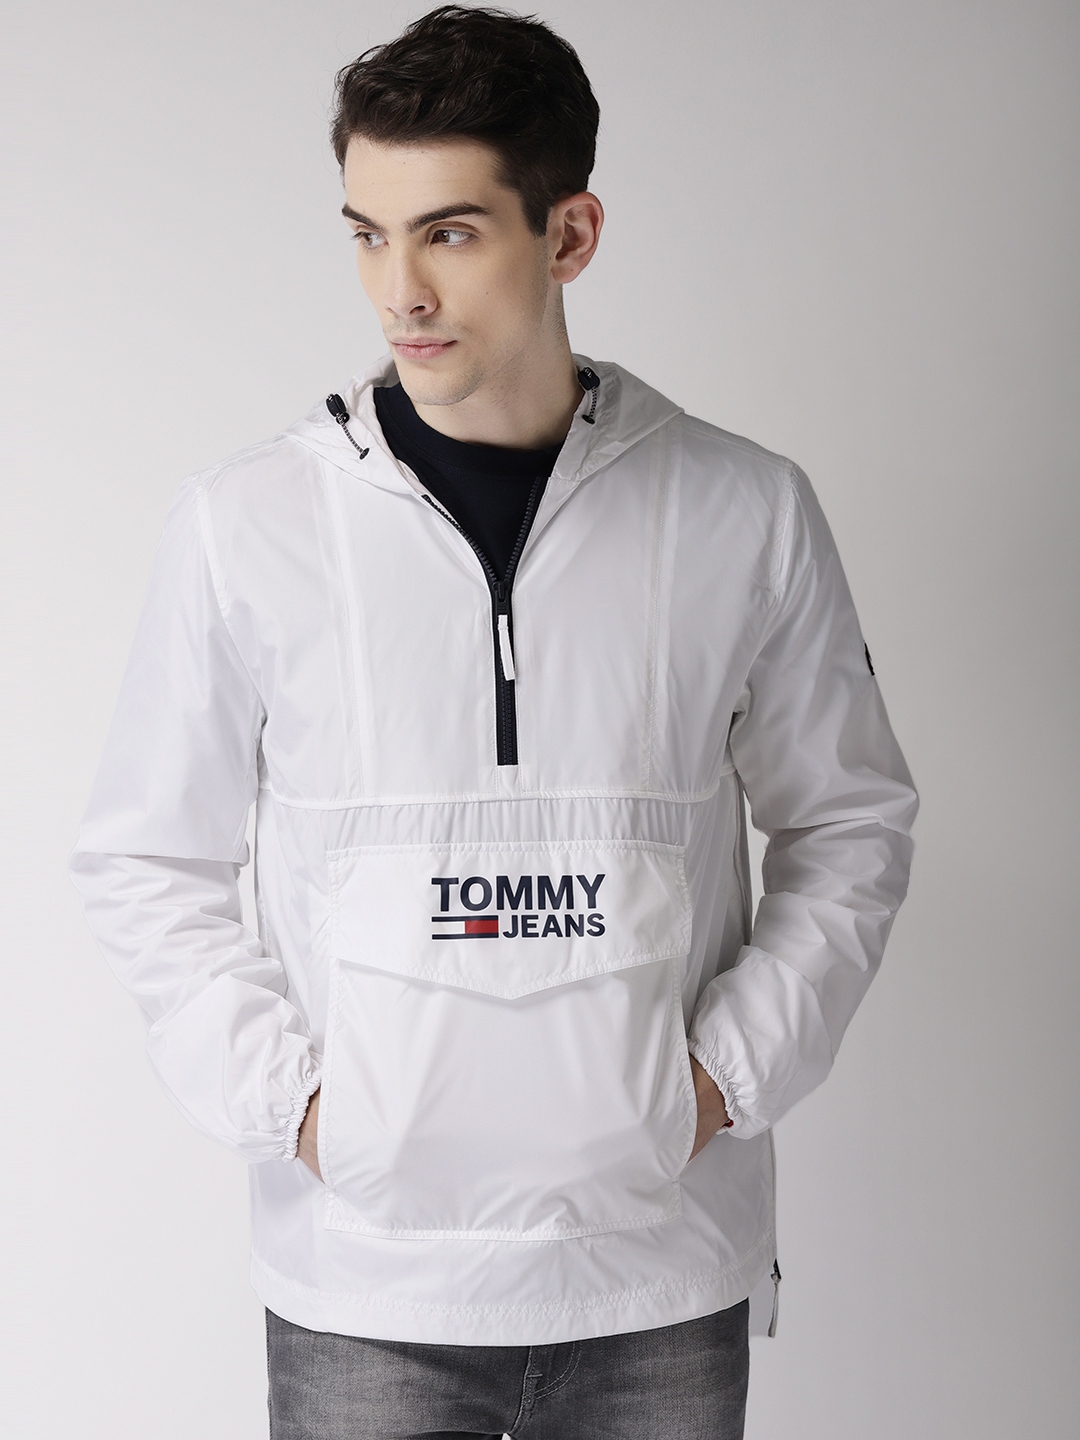 tommy hilfiger jacket white mens